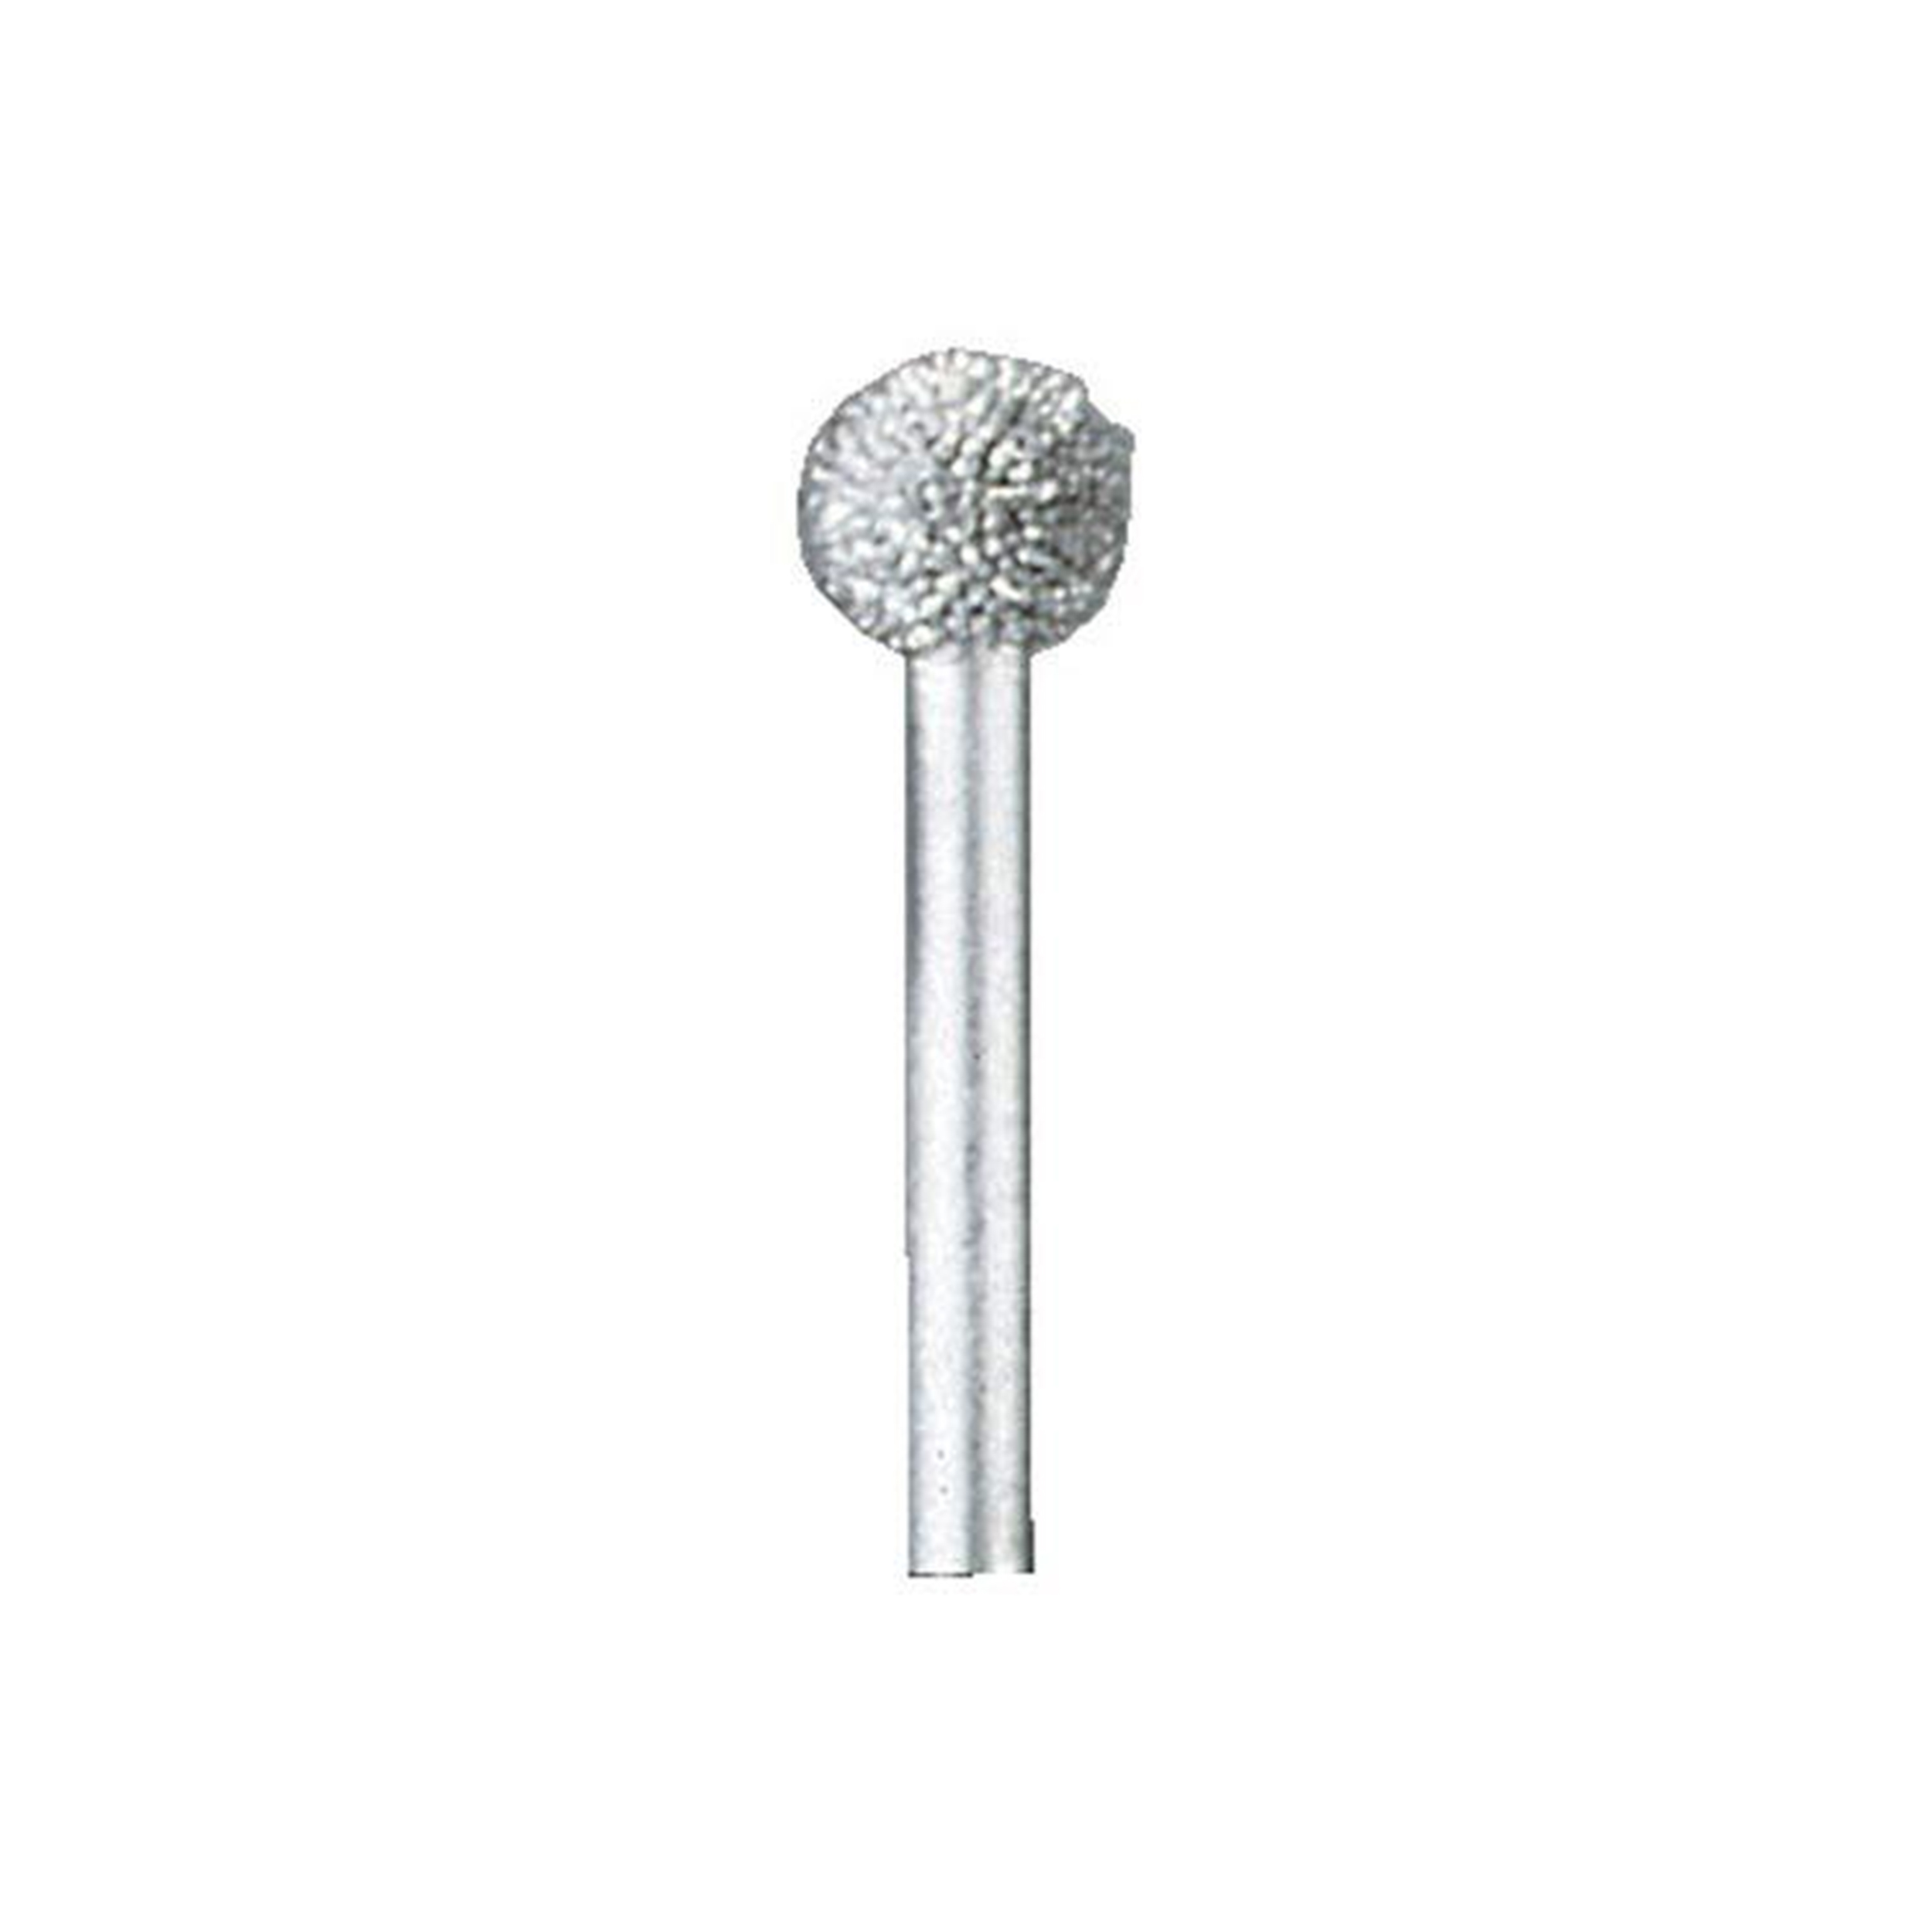 Structured Tooth Tungsten Carbide Cutter, 5/16" Dia. Ball, 1/8" Shank